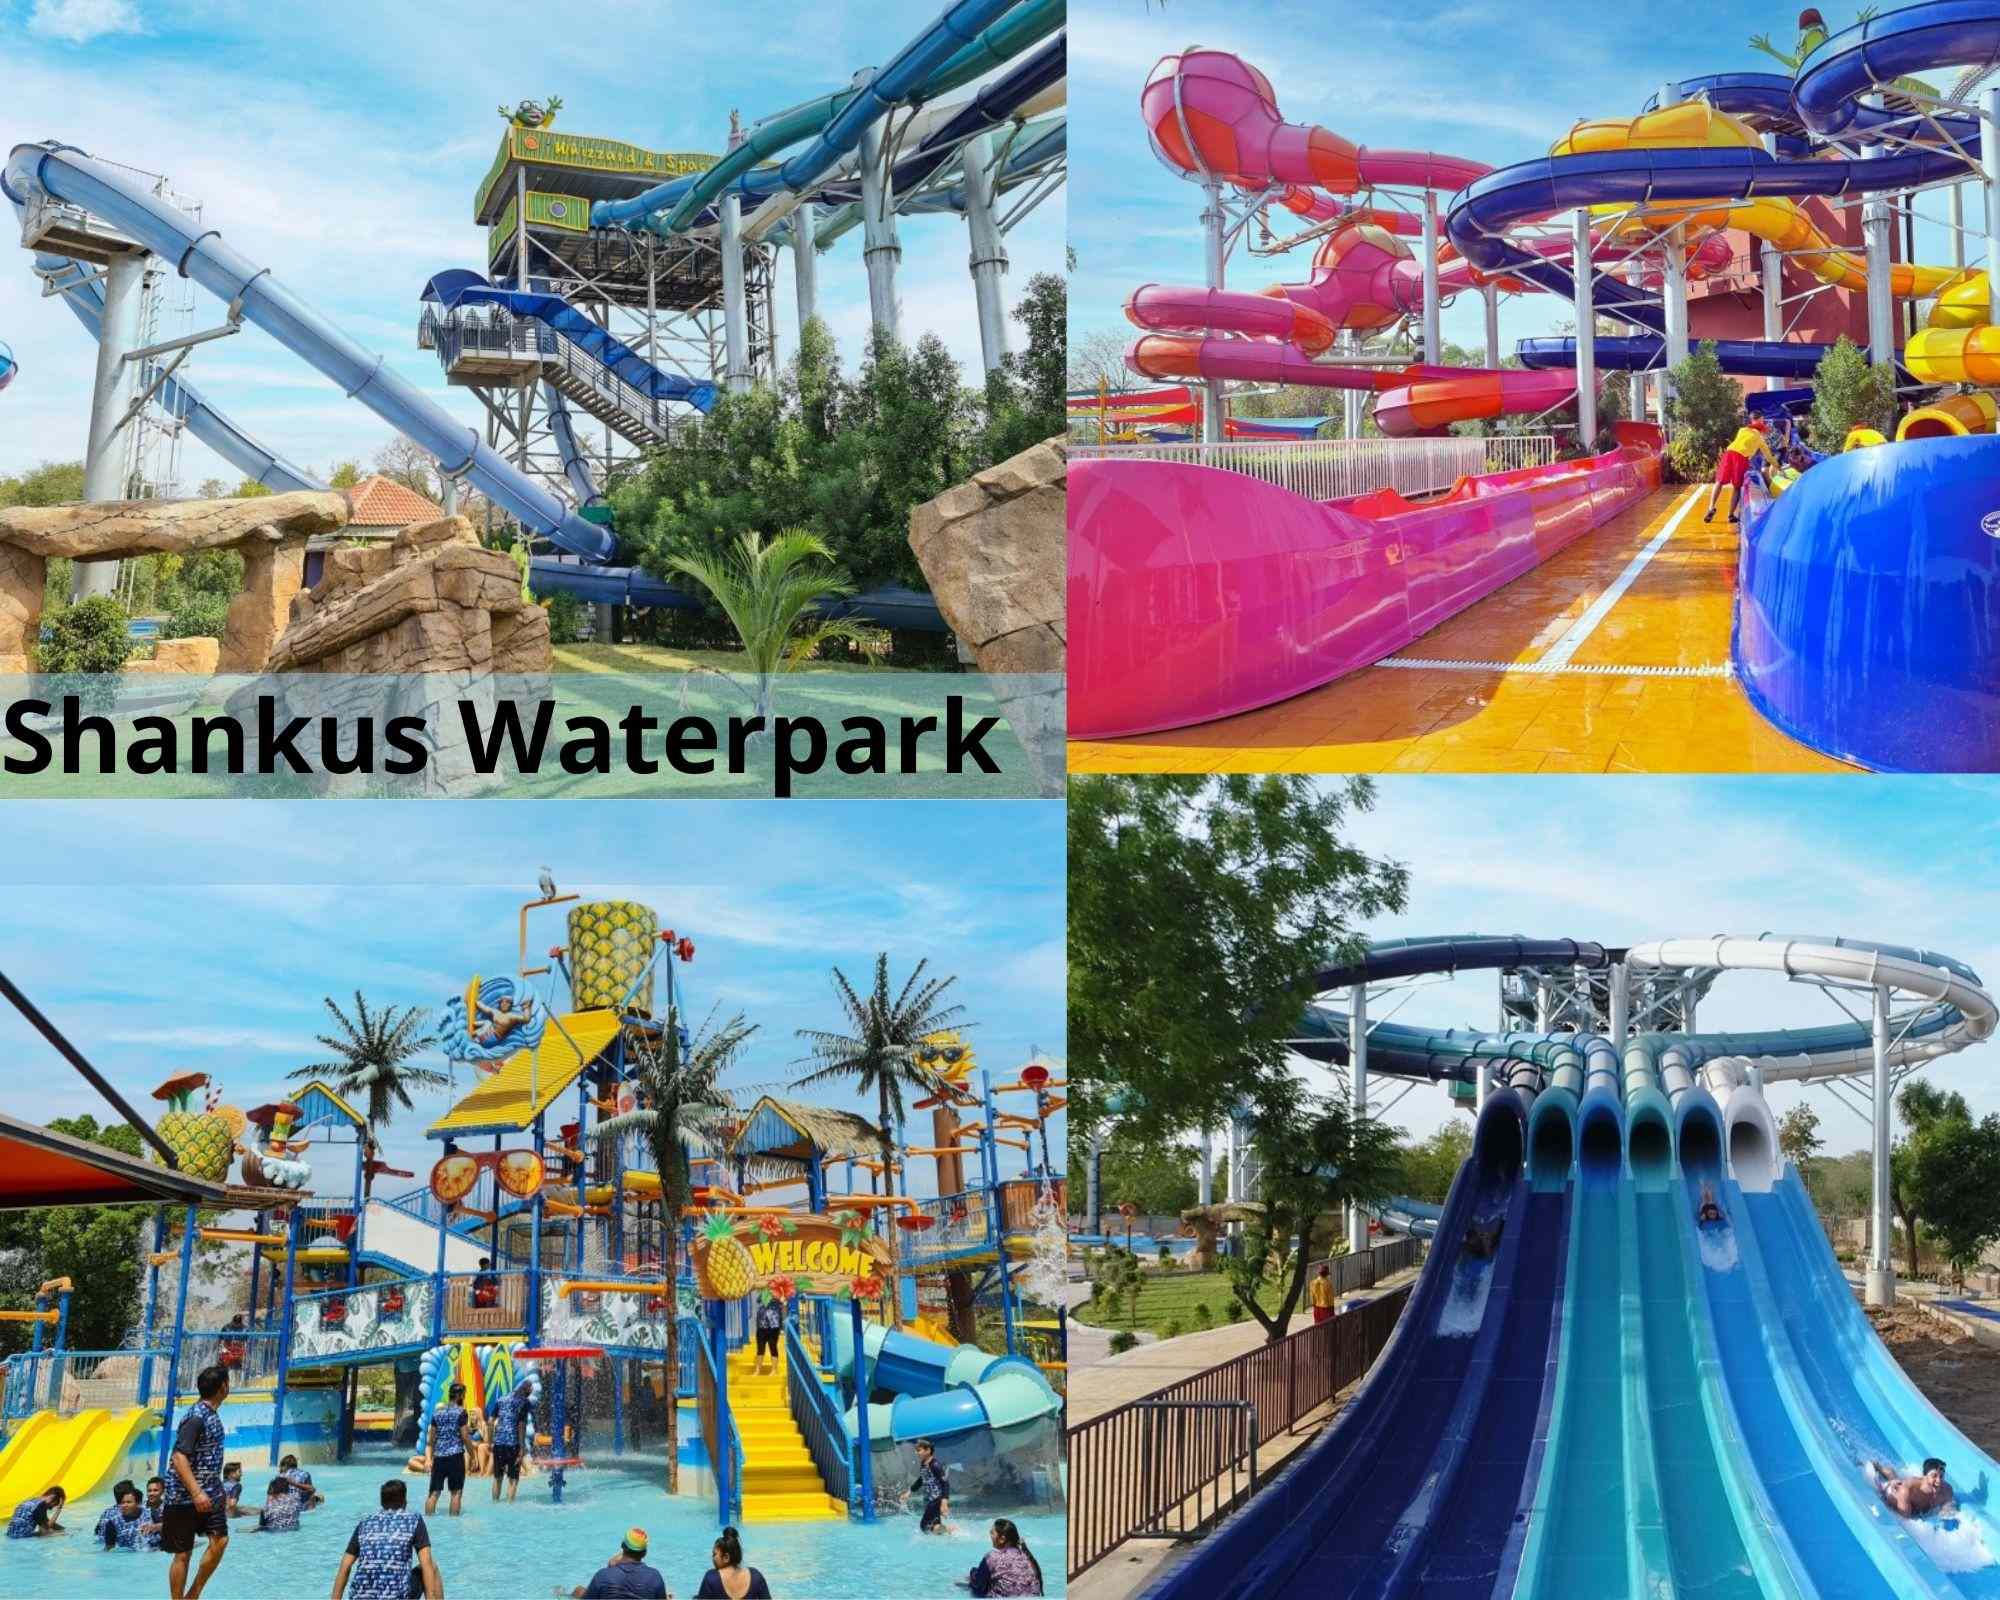 Shankus Waterpark